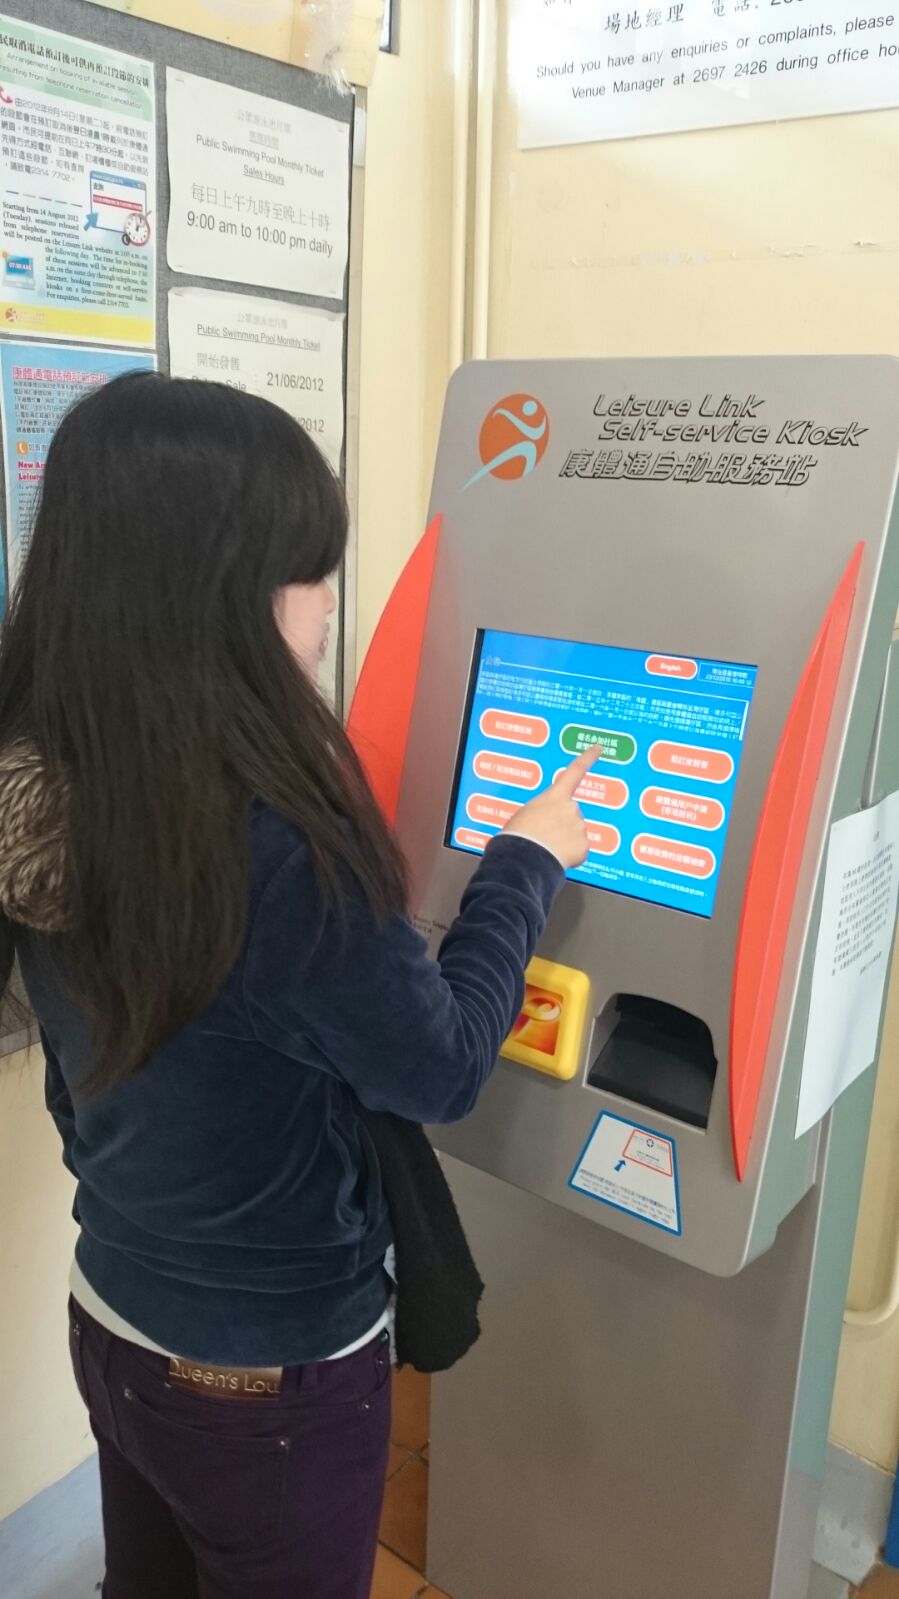 A Citizen using a Leisure Link Self-service Kiosk